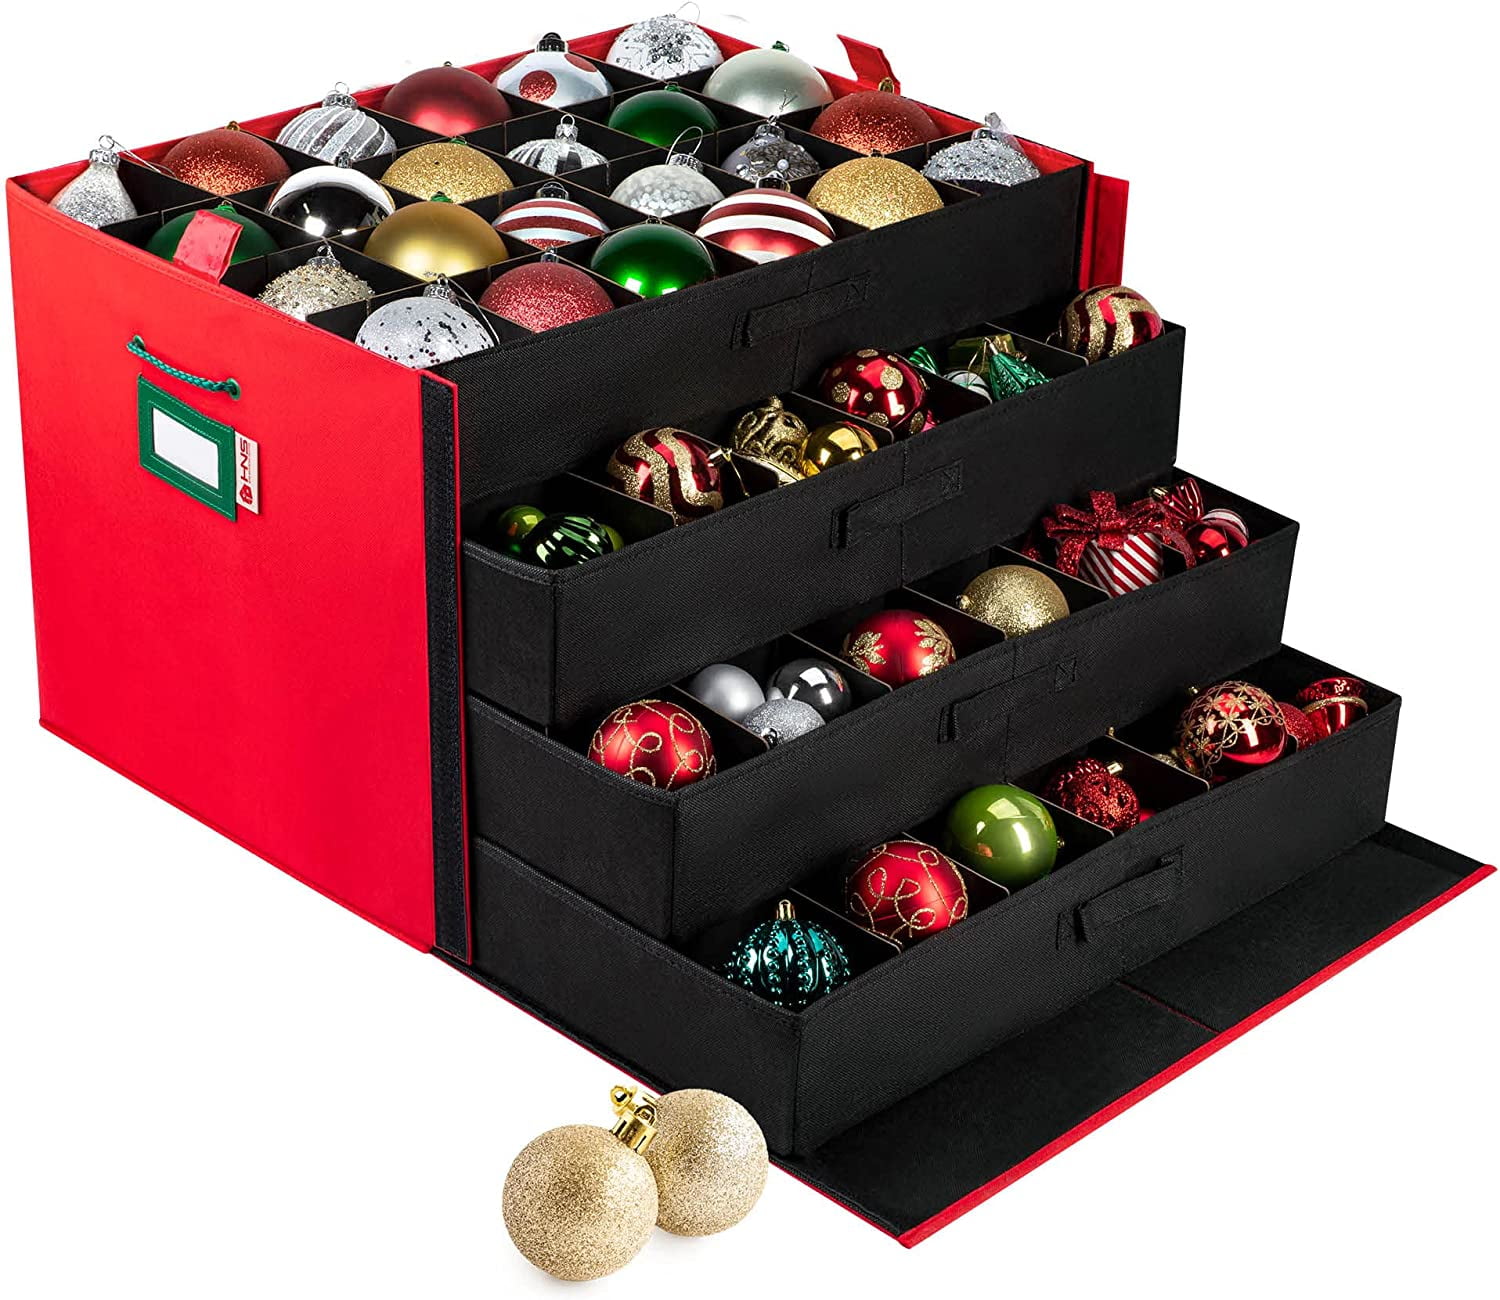 Pakon Ornament Storage Box, Christmas 